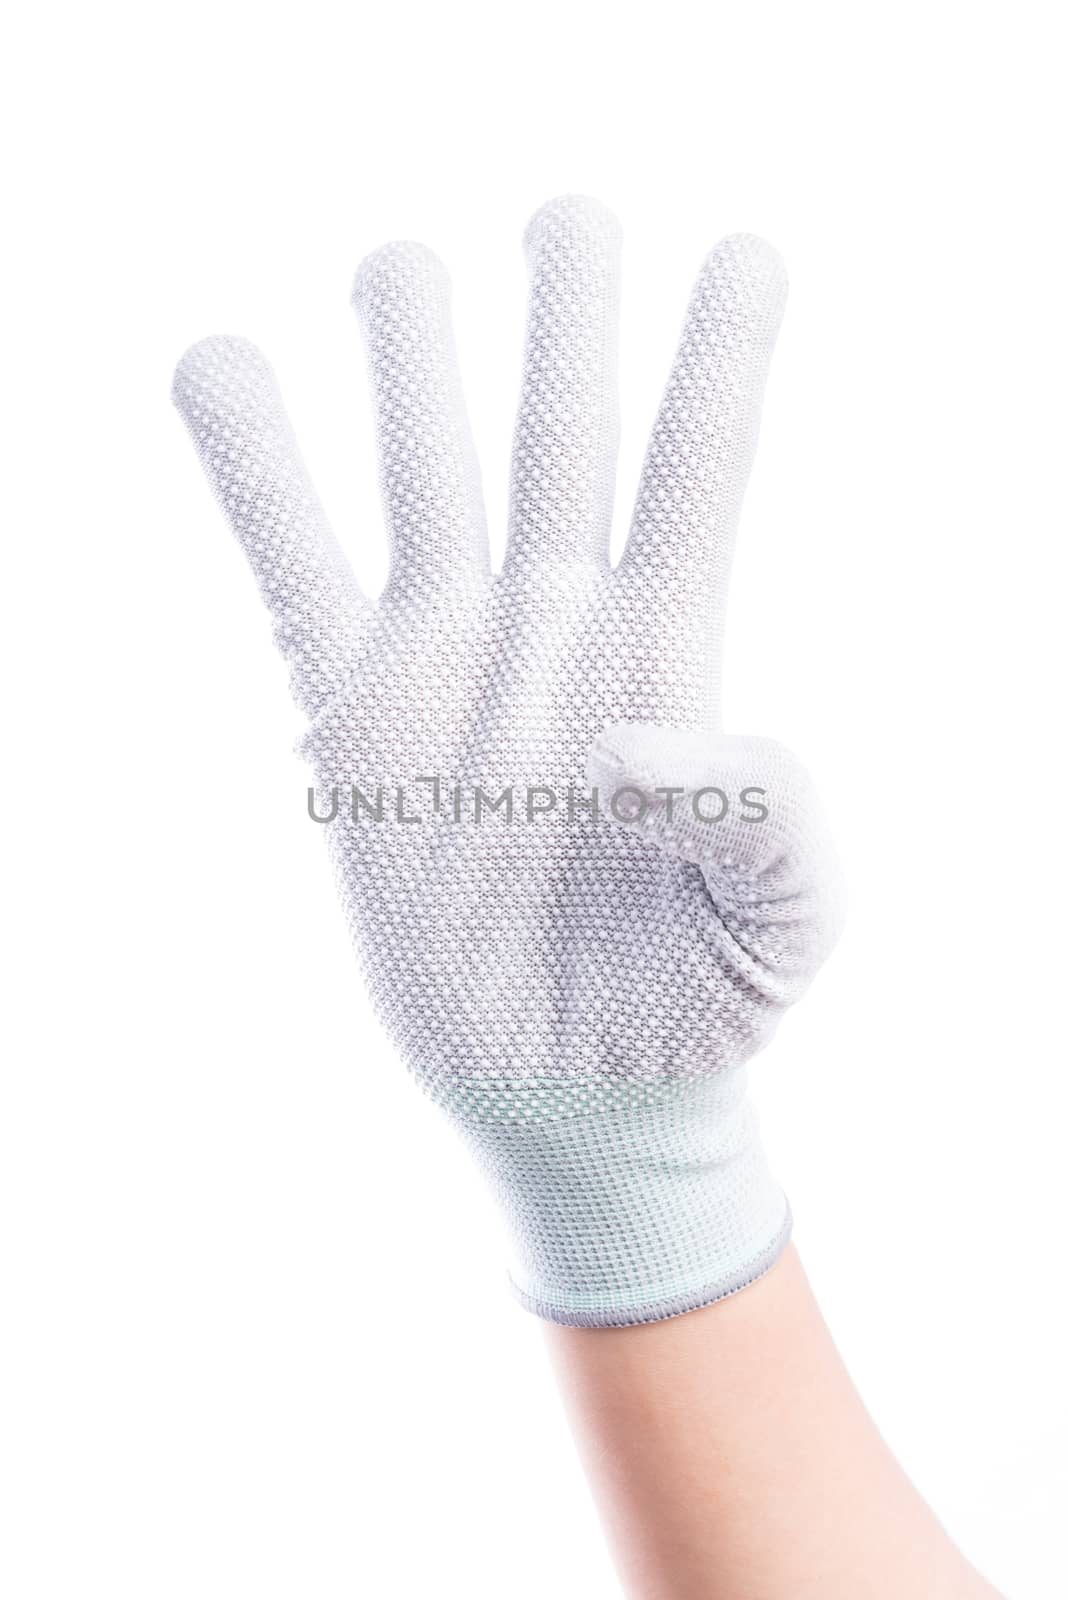 Show Hands four finger with cotton by Sorapop